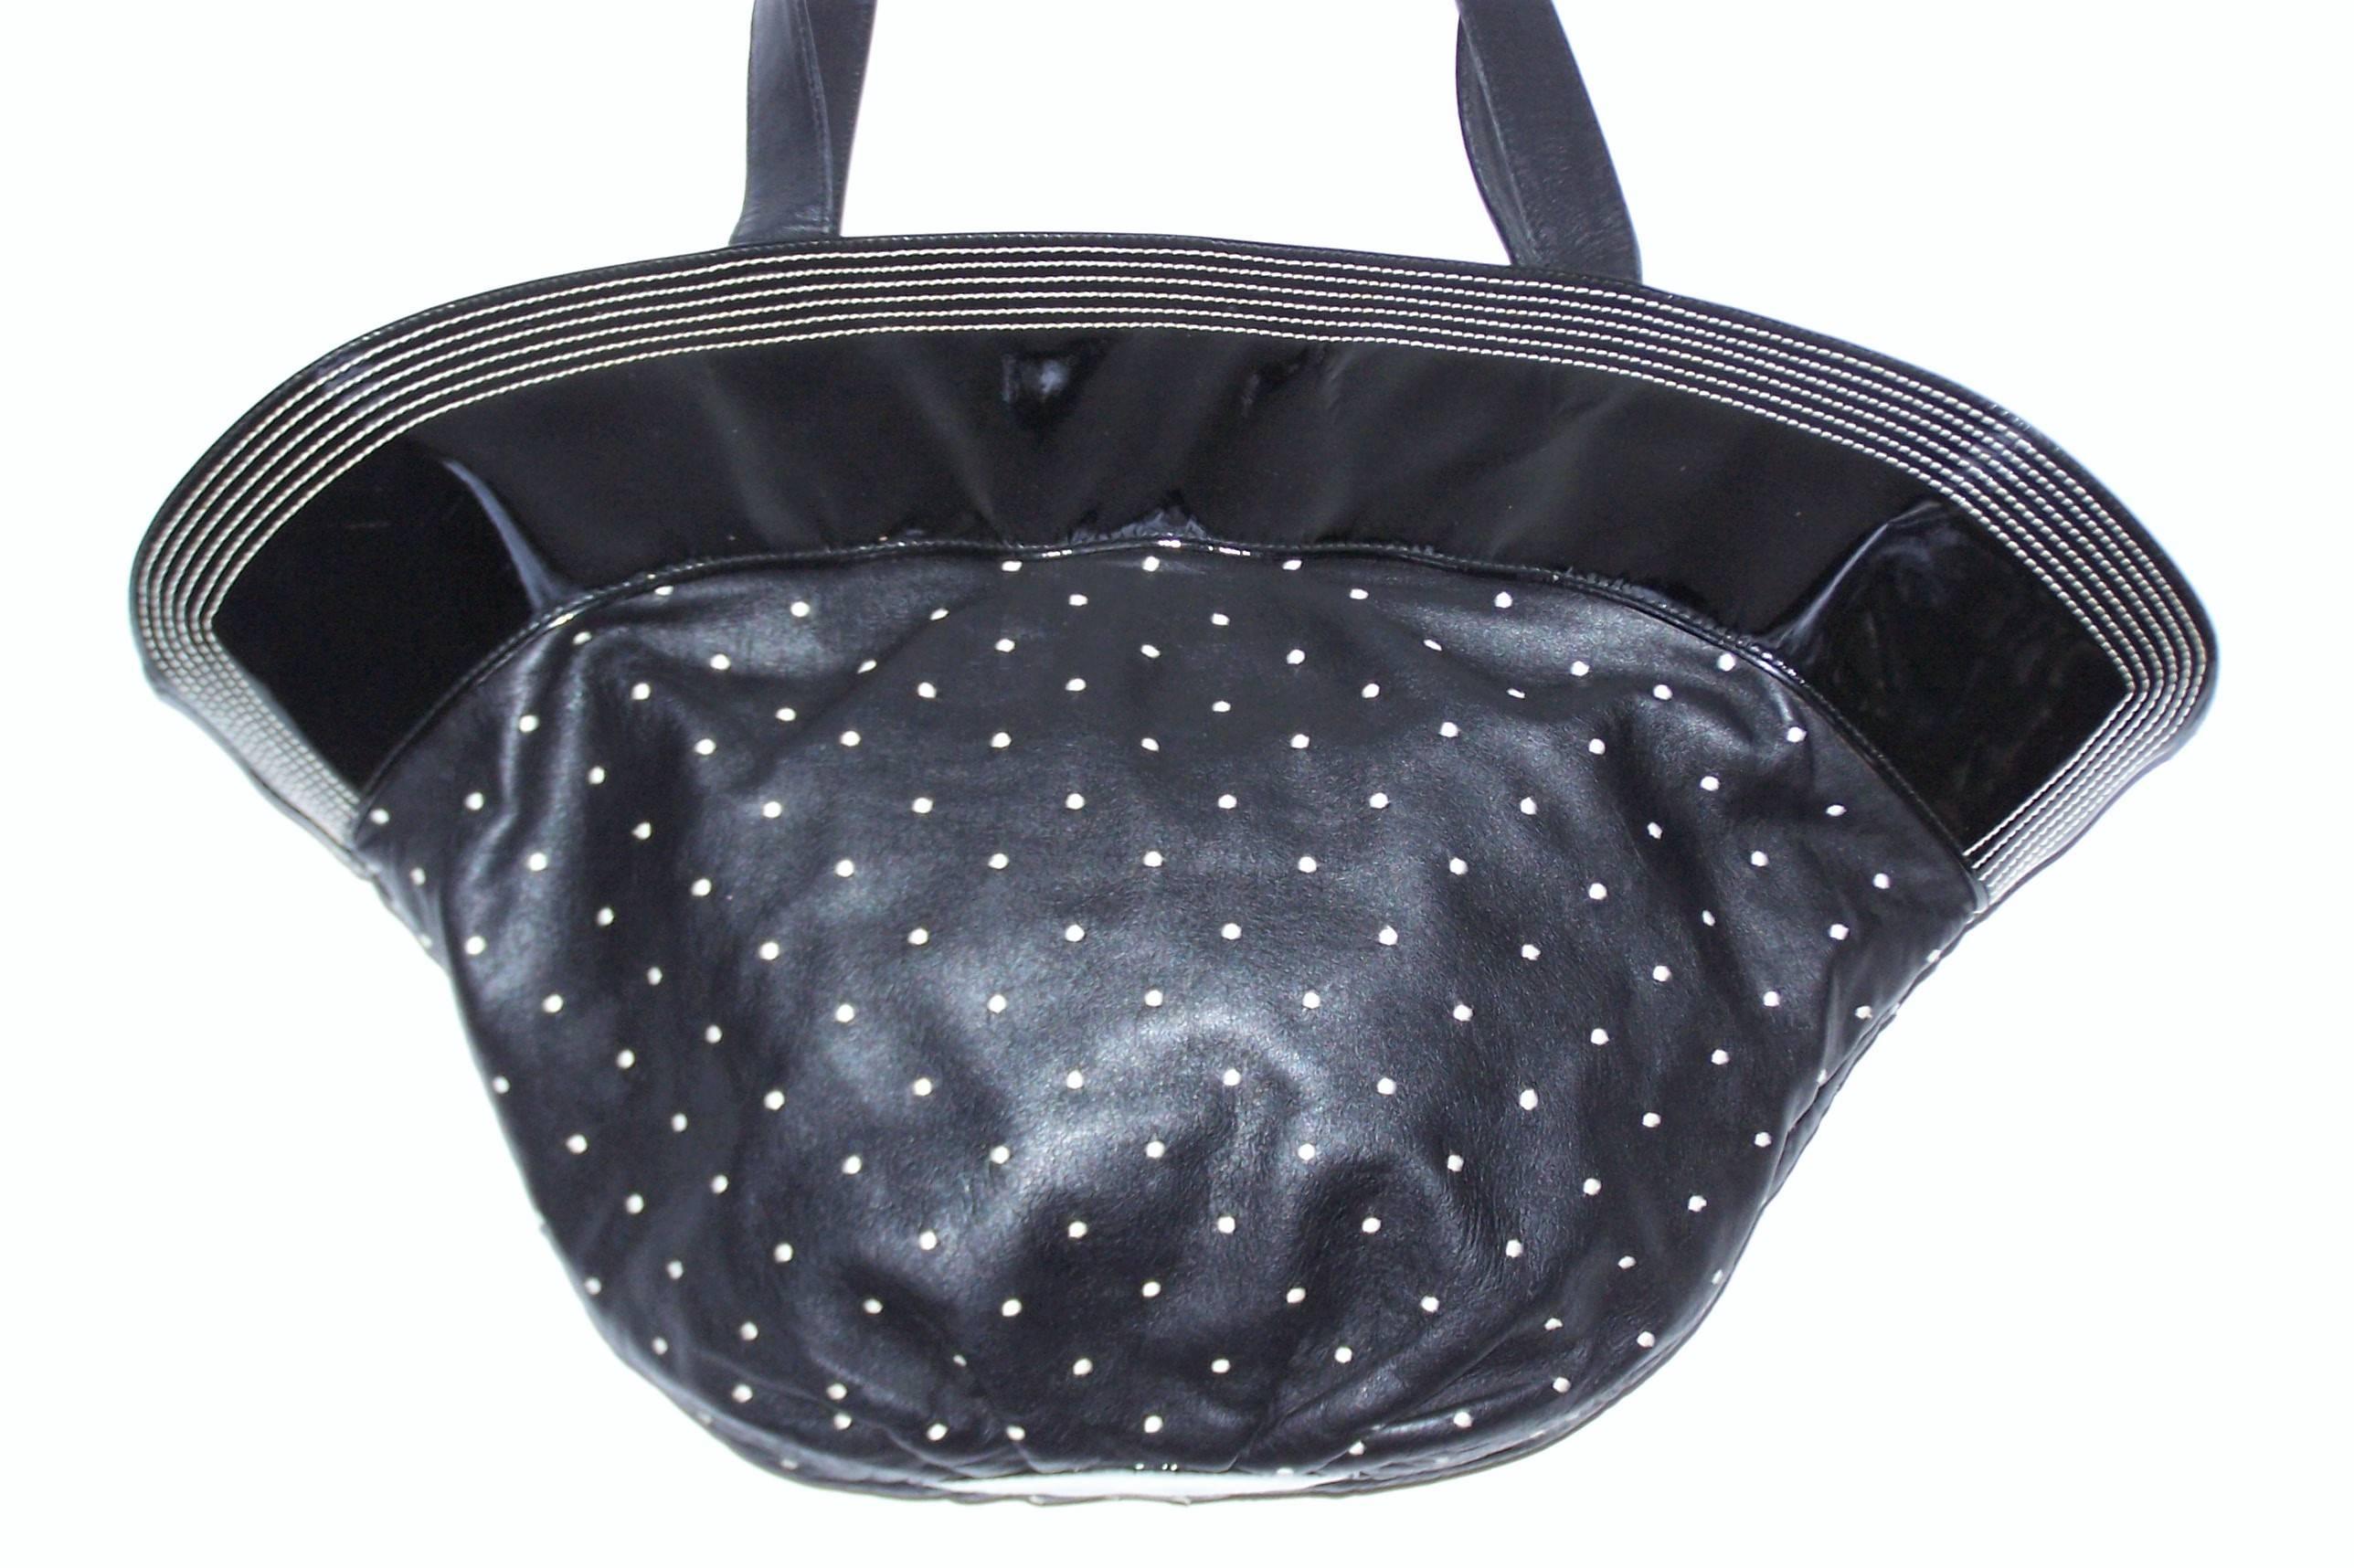 1980's Braccialini Black & White Polka Dot Patent Leather Handbag 1